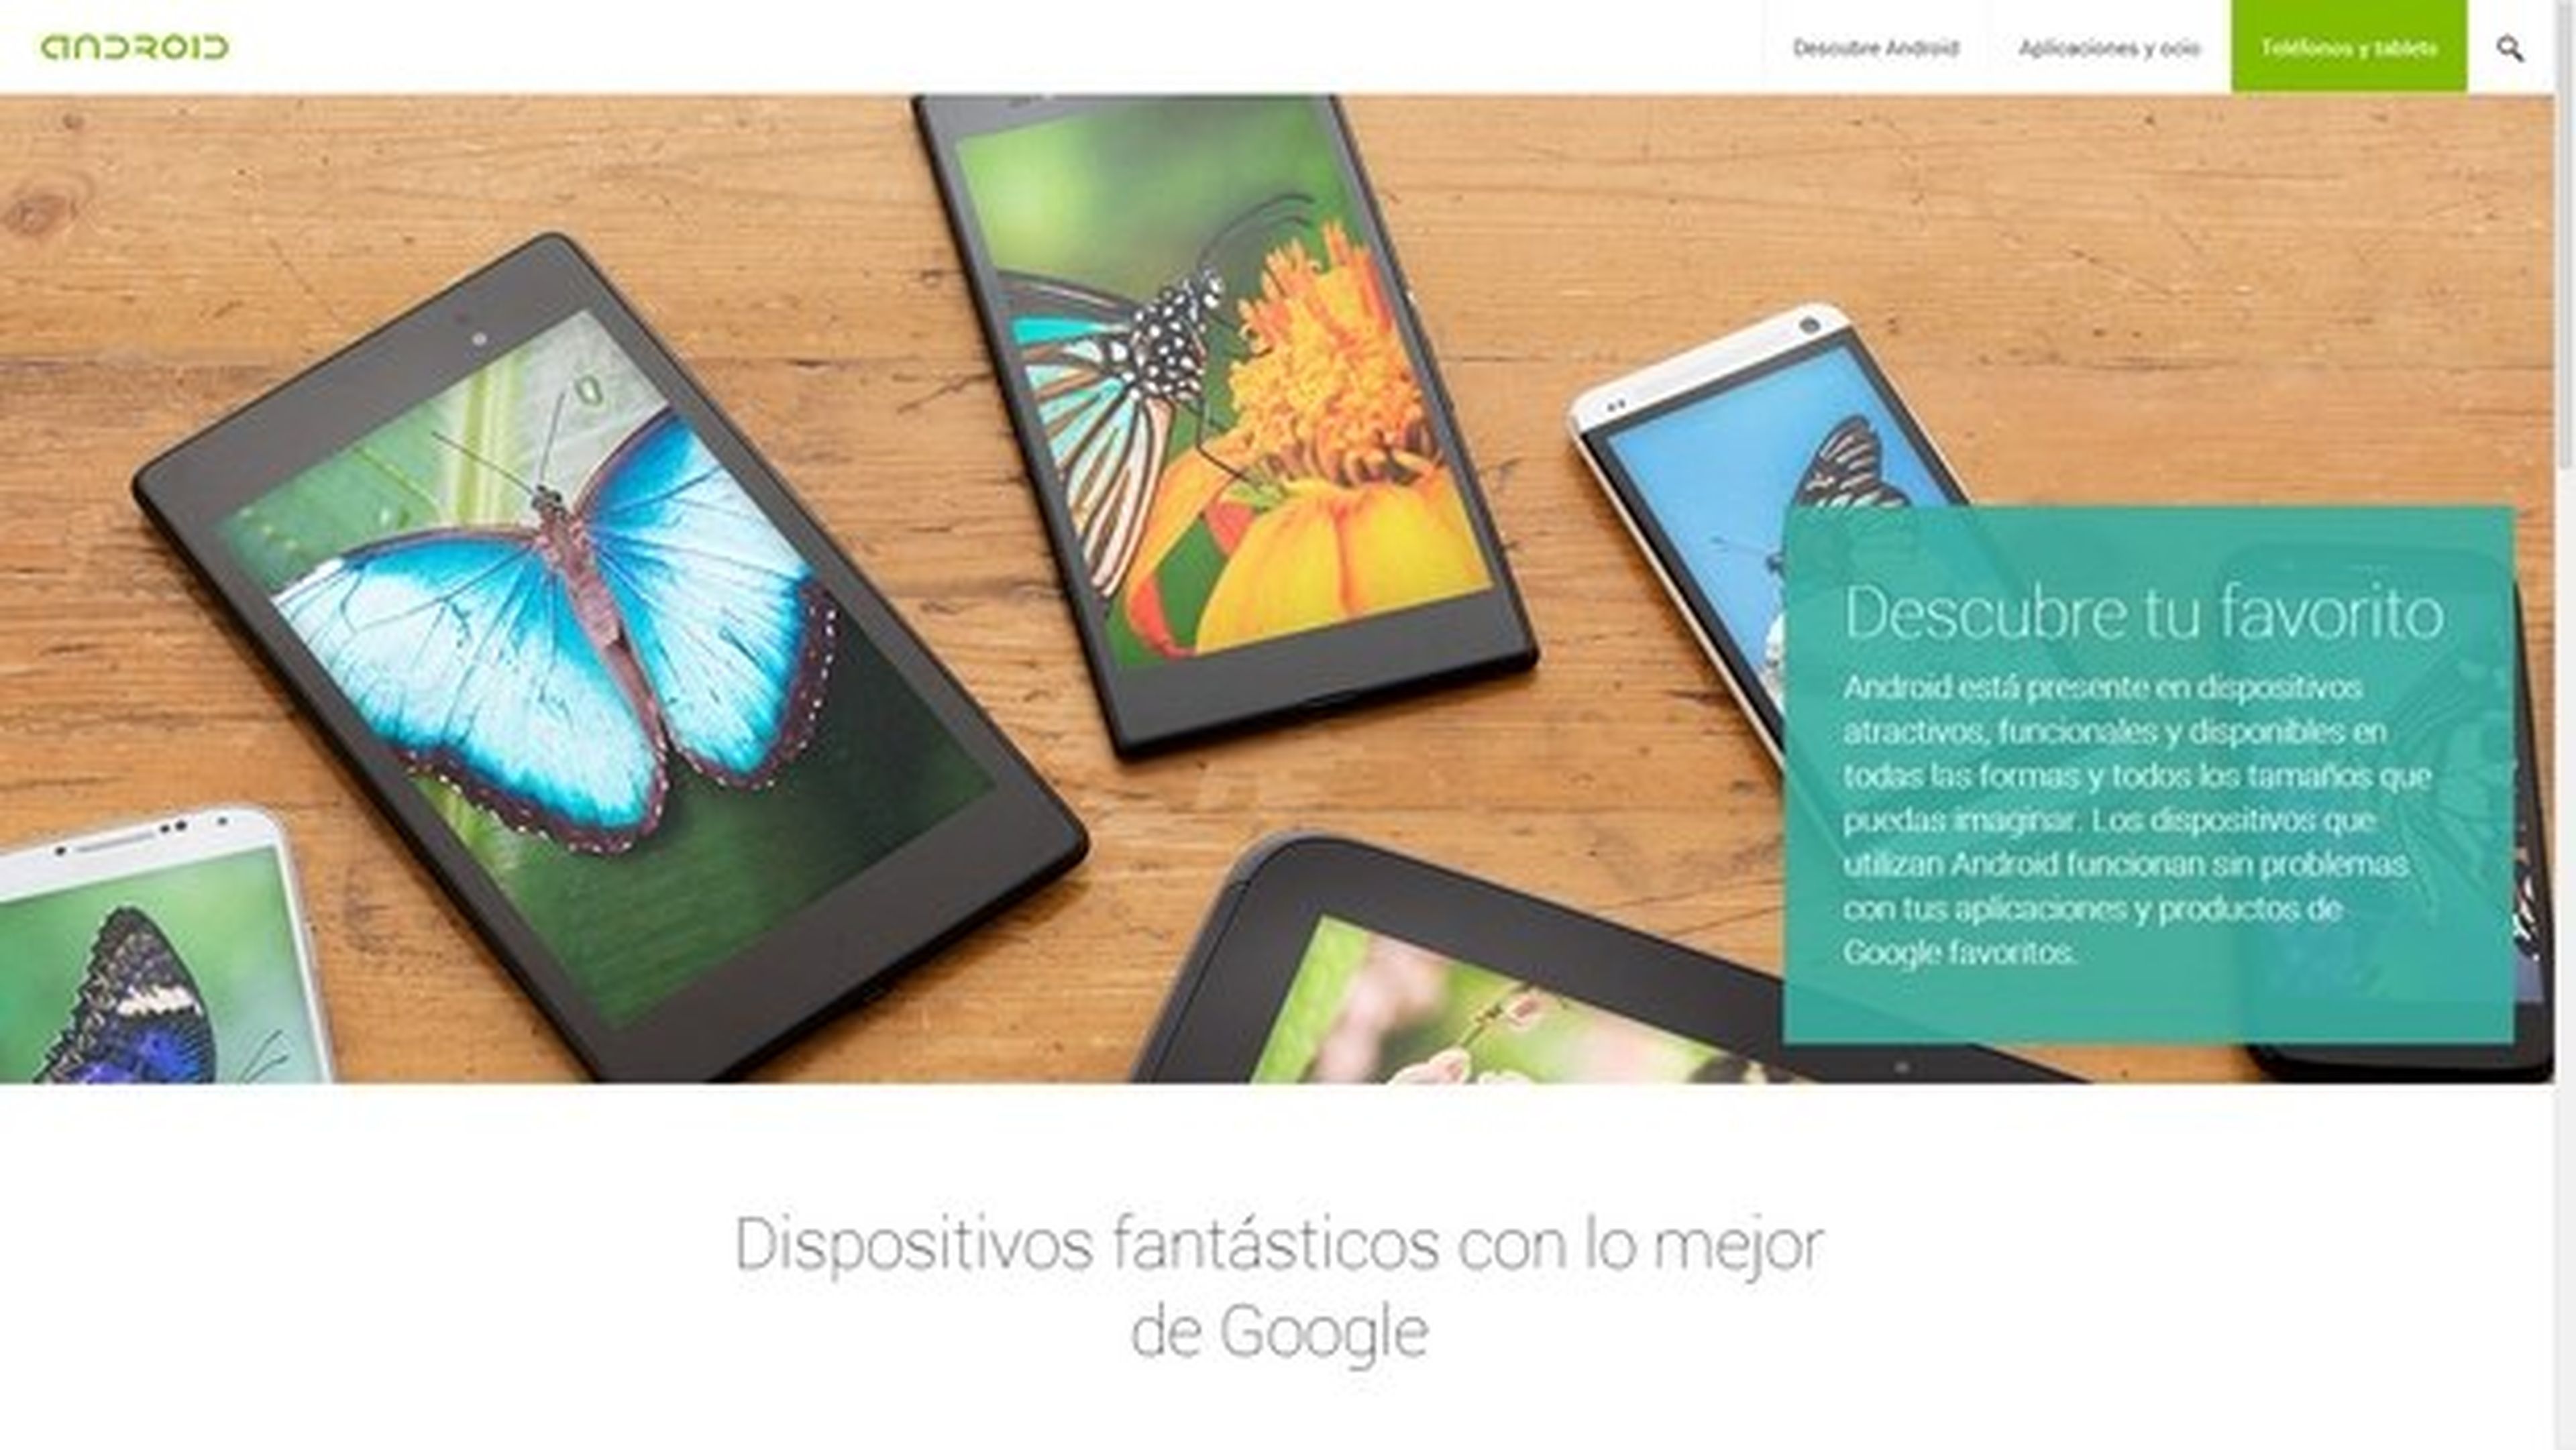 Web oficial Android.com ya en español